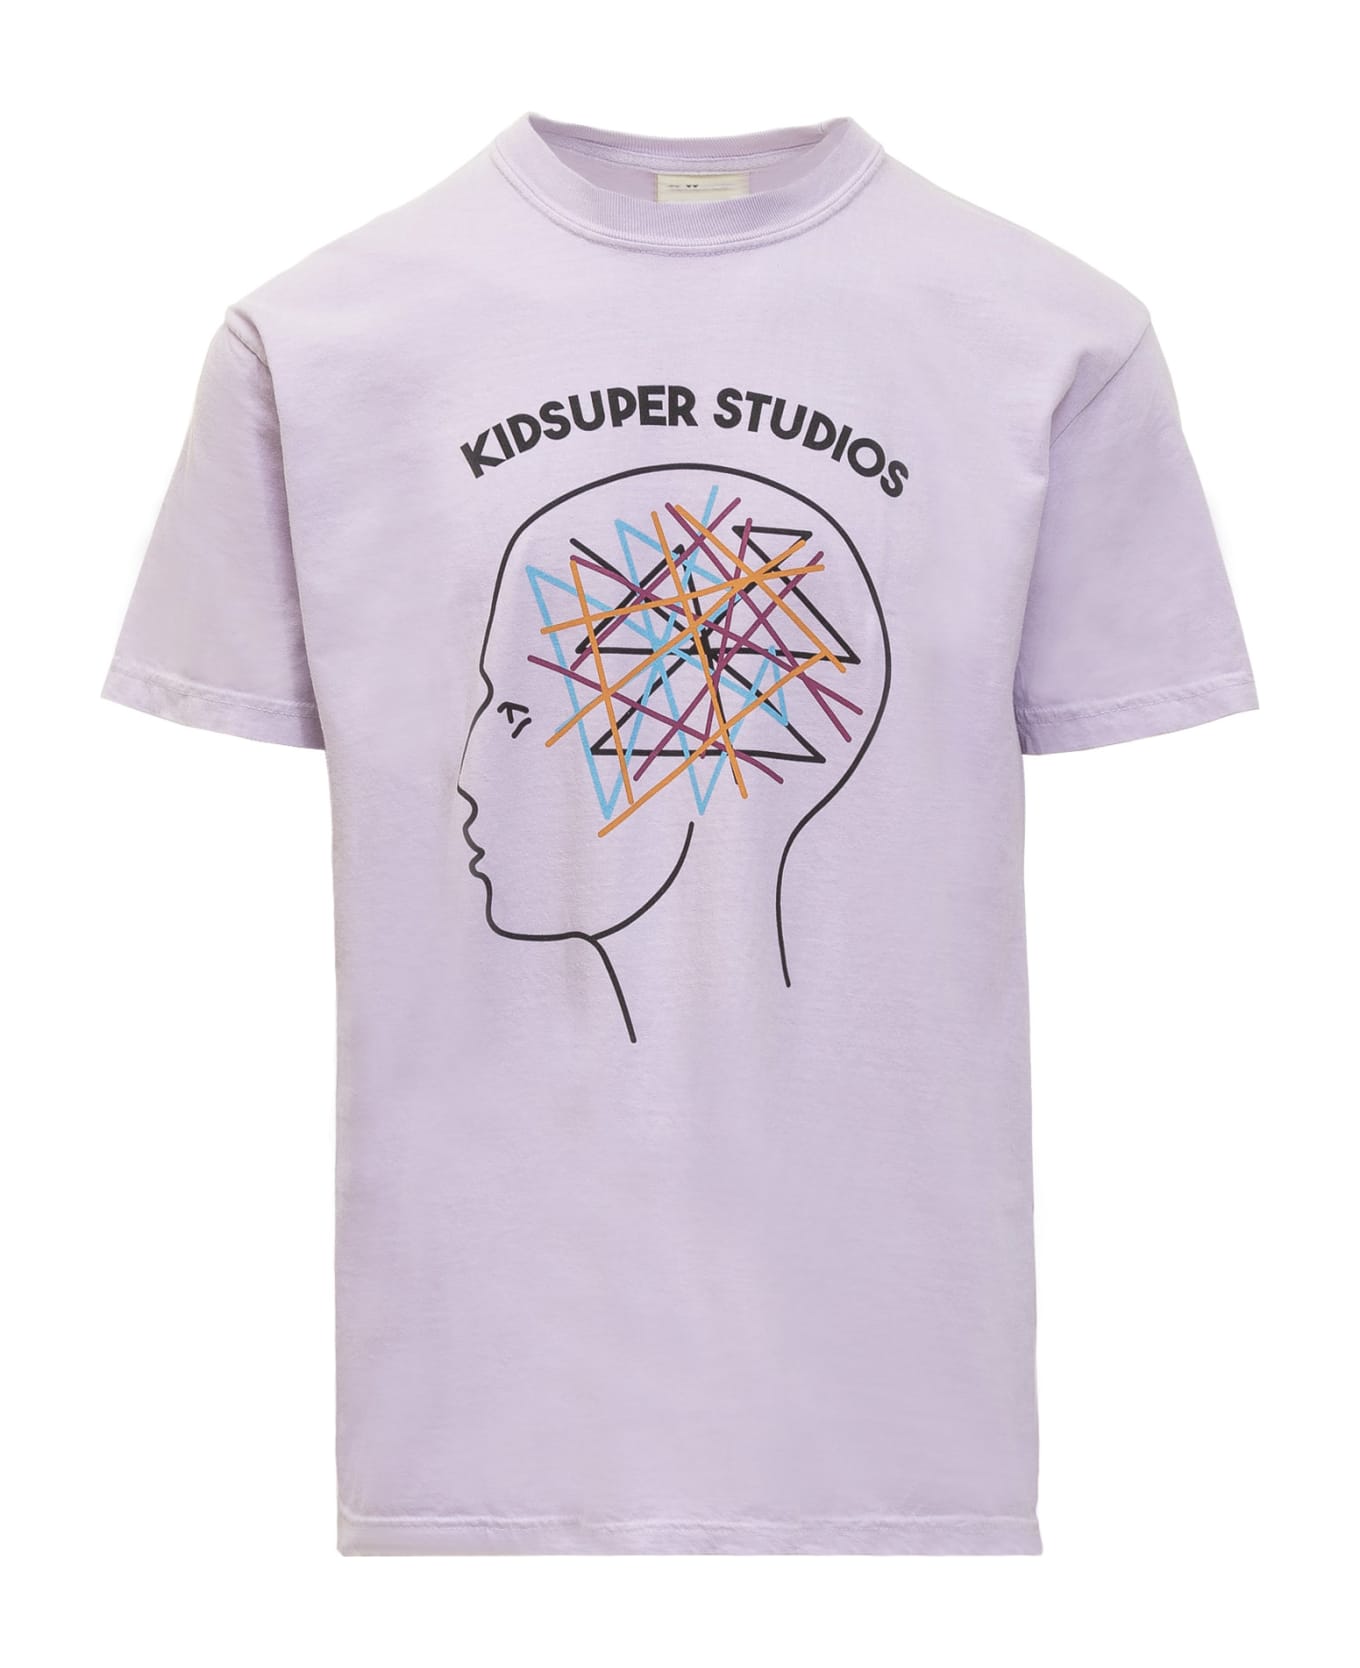 Kidsuper Thounght T-shirt - LILAC